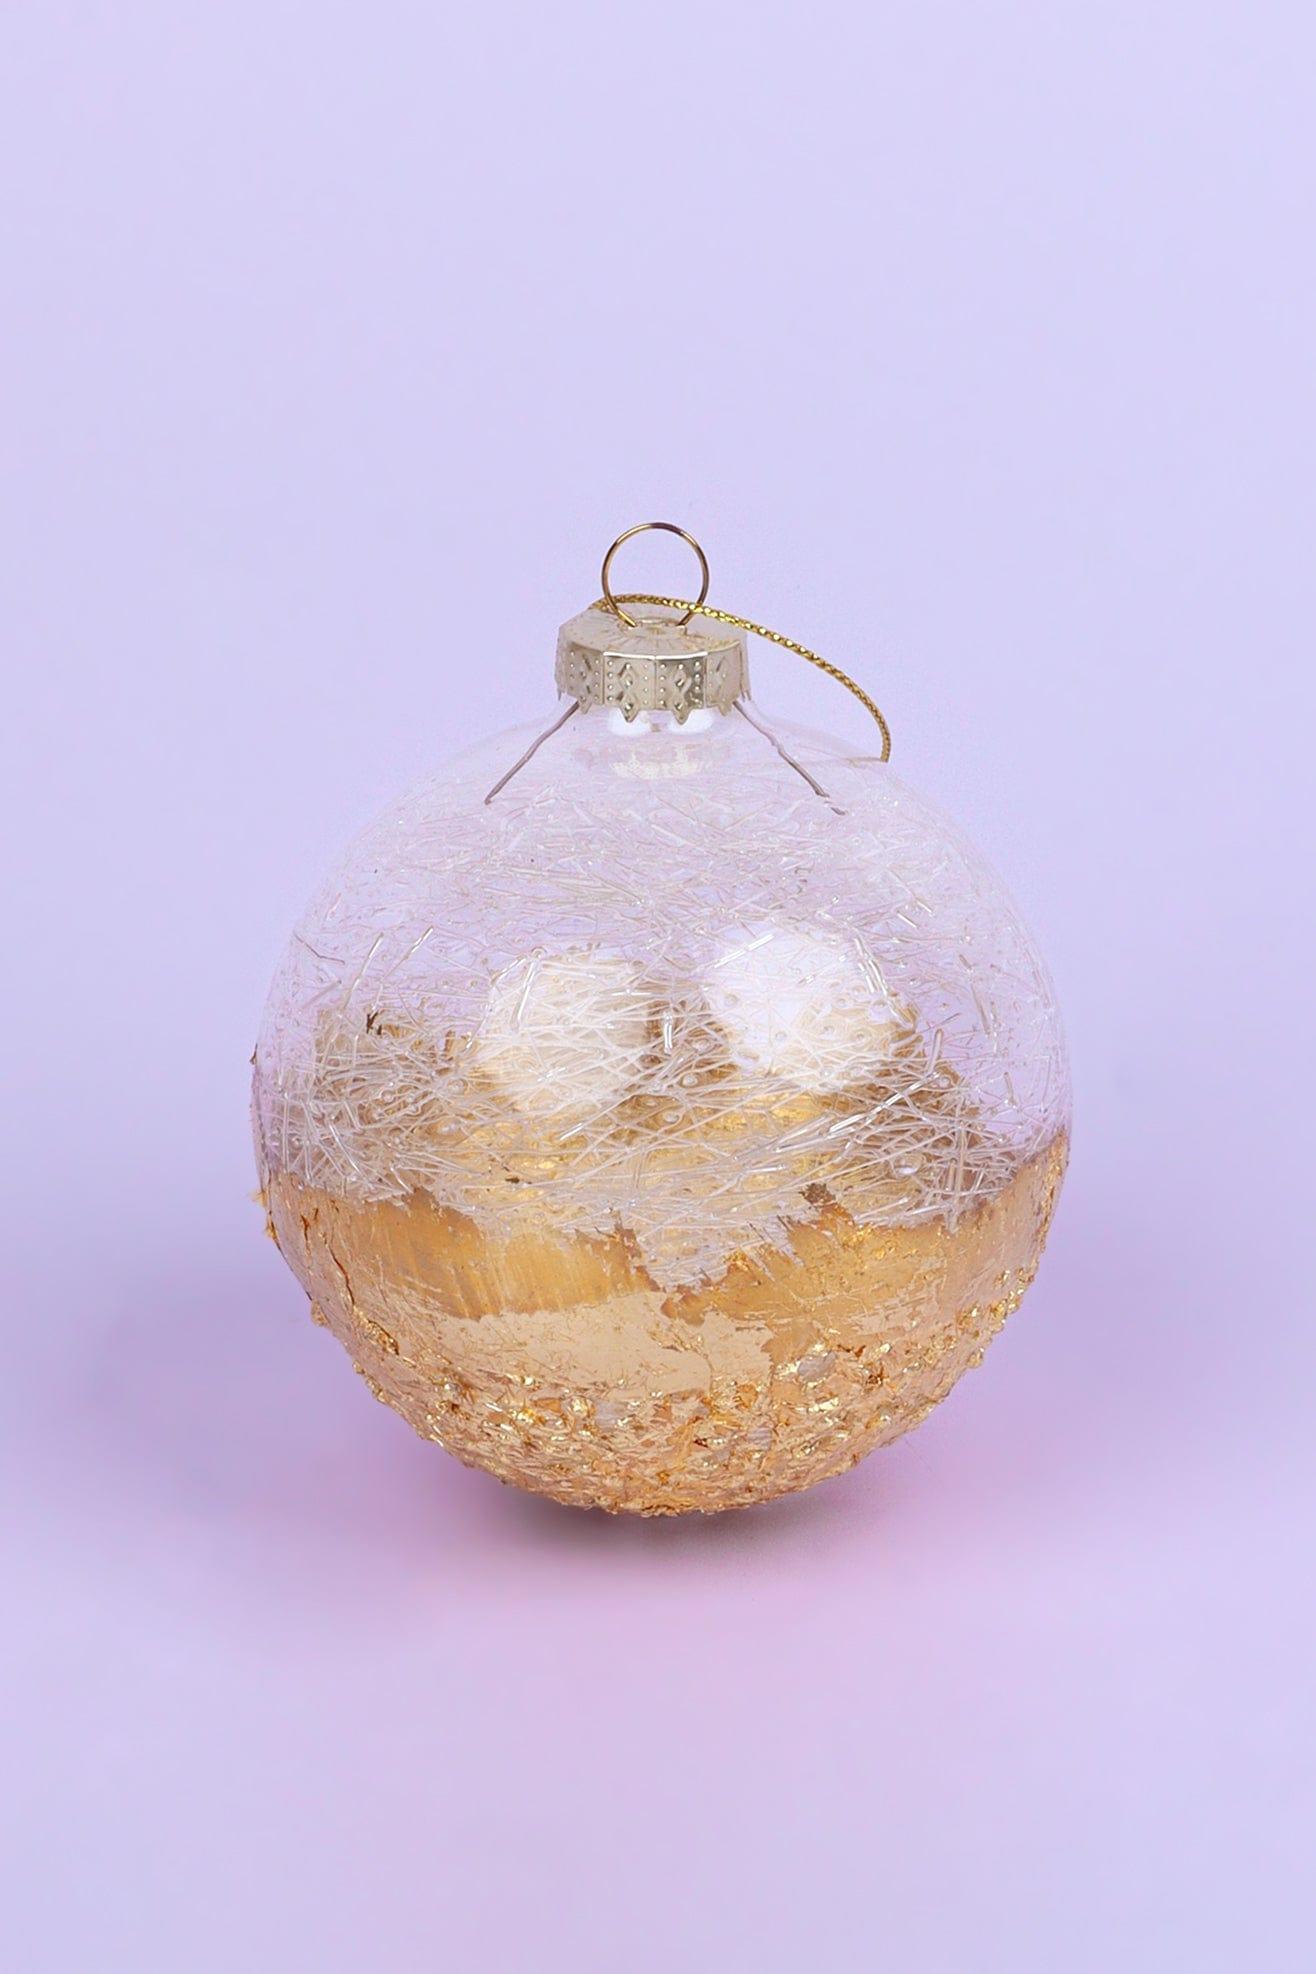 G Decor Christmas Decorations Gold / Spun Glass Elegant Gold Christmas Baubles - Clear Spun Glass and Sequin-Adorned Gold